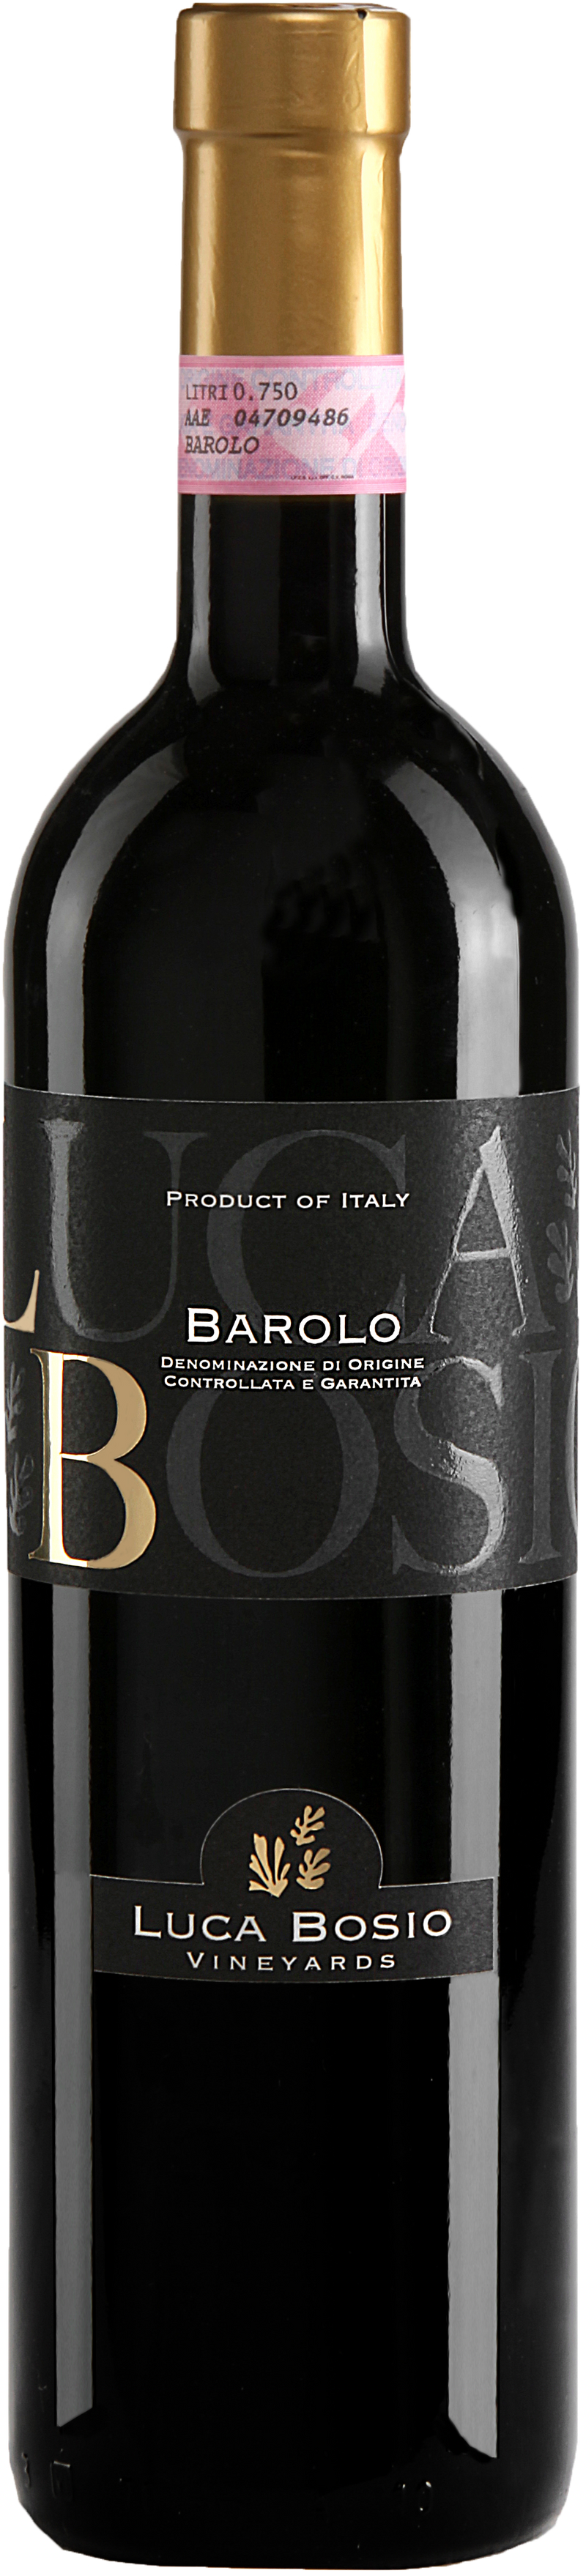 2019 Luca Bosio Barolo D.O.C.G